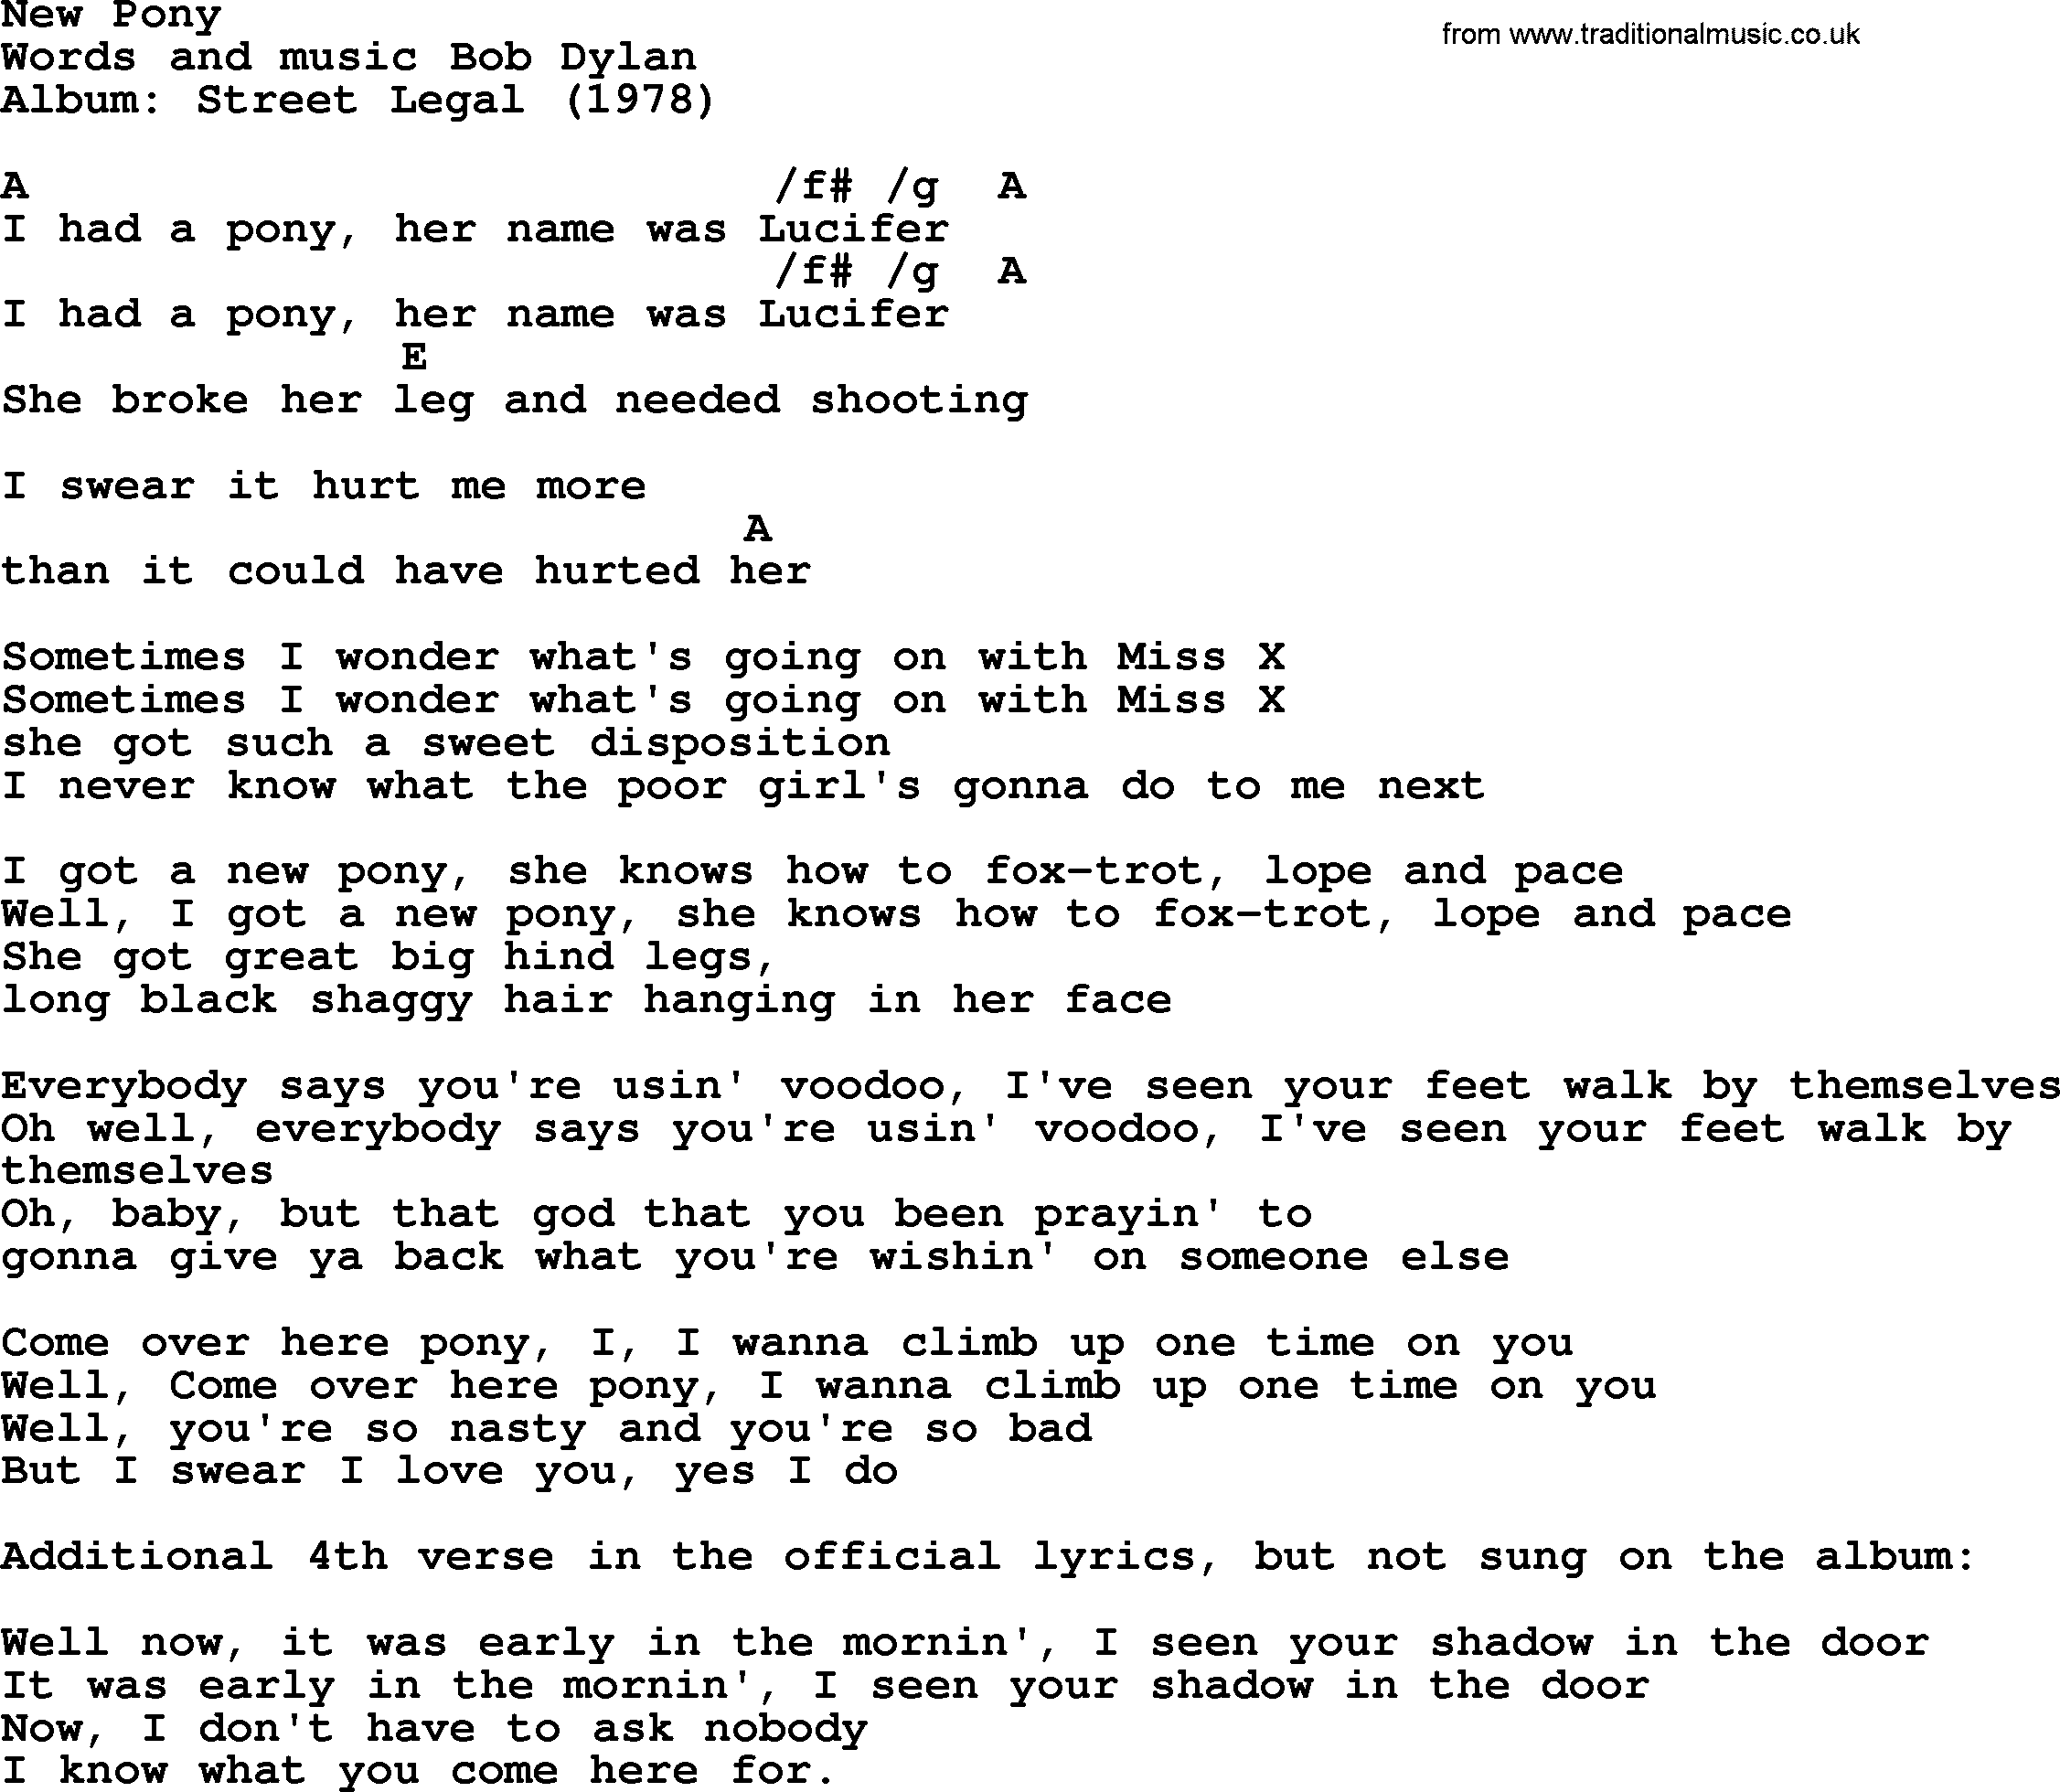 Bob Dylan song, lyrics with chords - New Pony